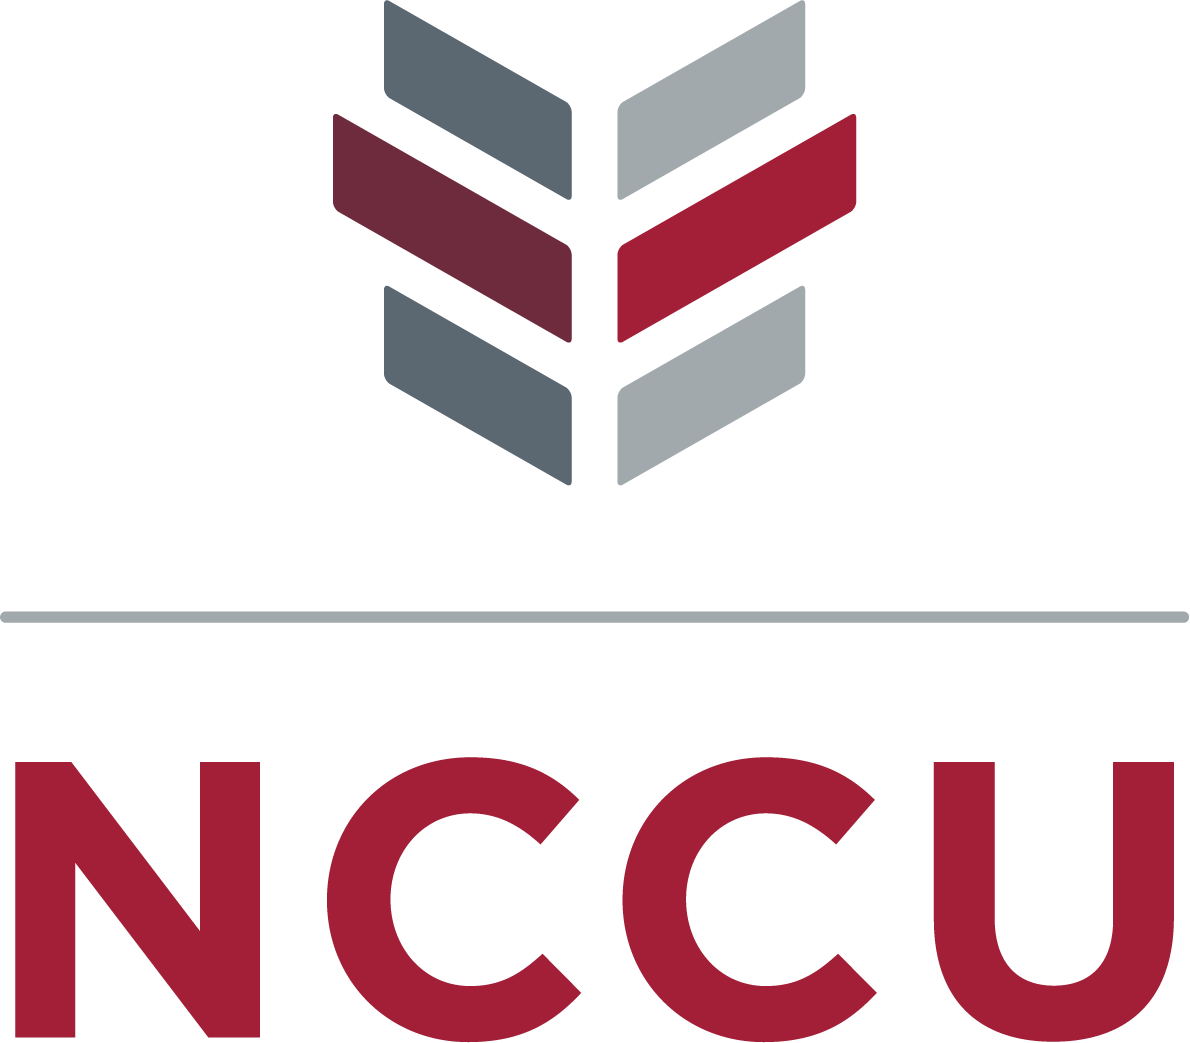 North Carolina Central University (NCCU) undergraduate and postgraduate